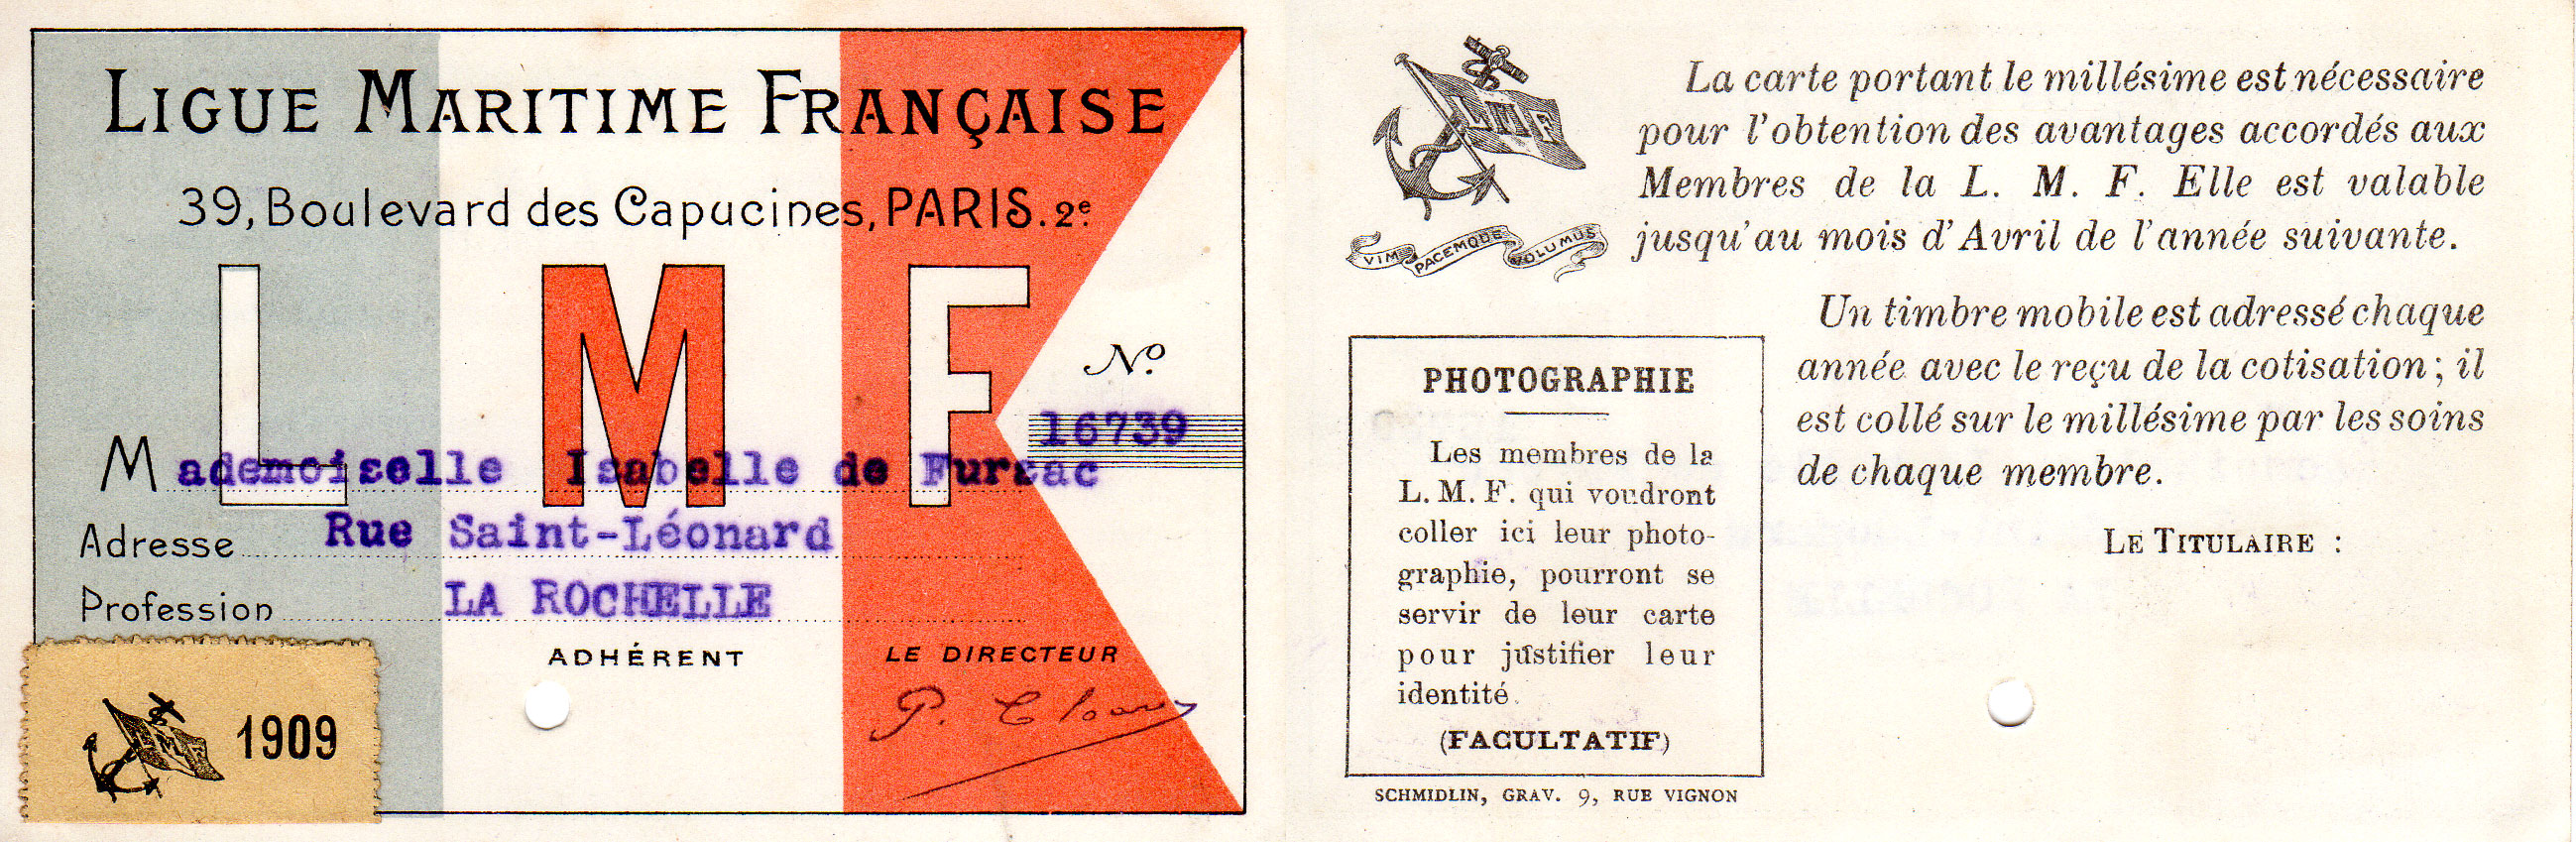 Liguemaritime1909